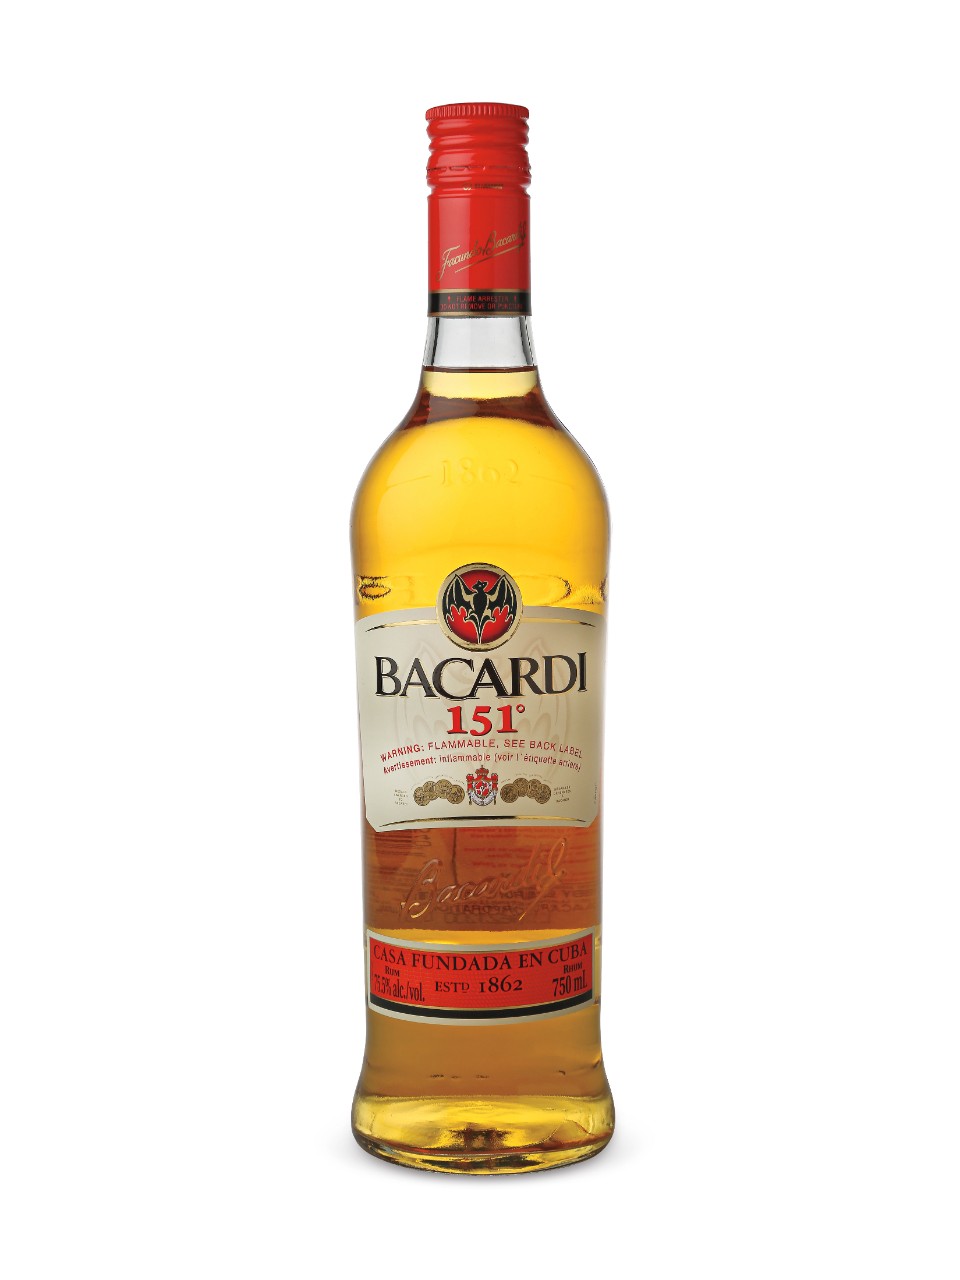 Bacardi 151 Overproof Rum